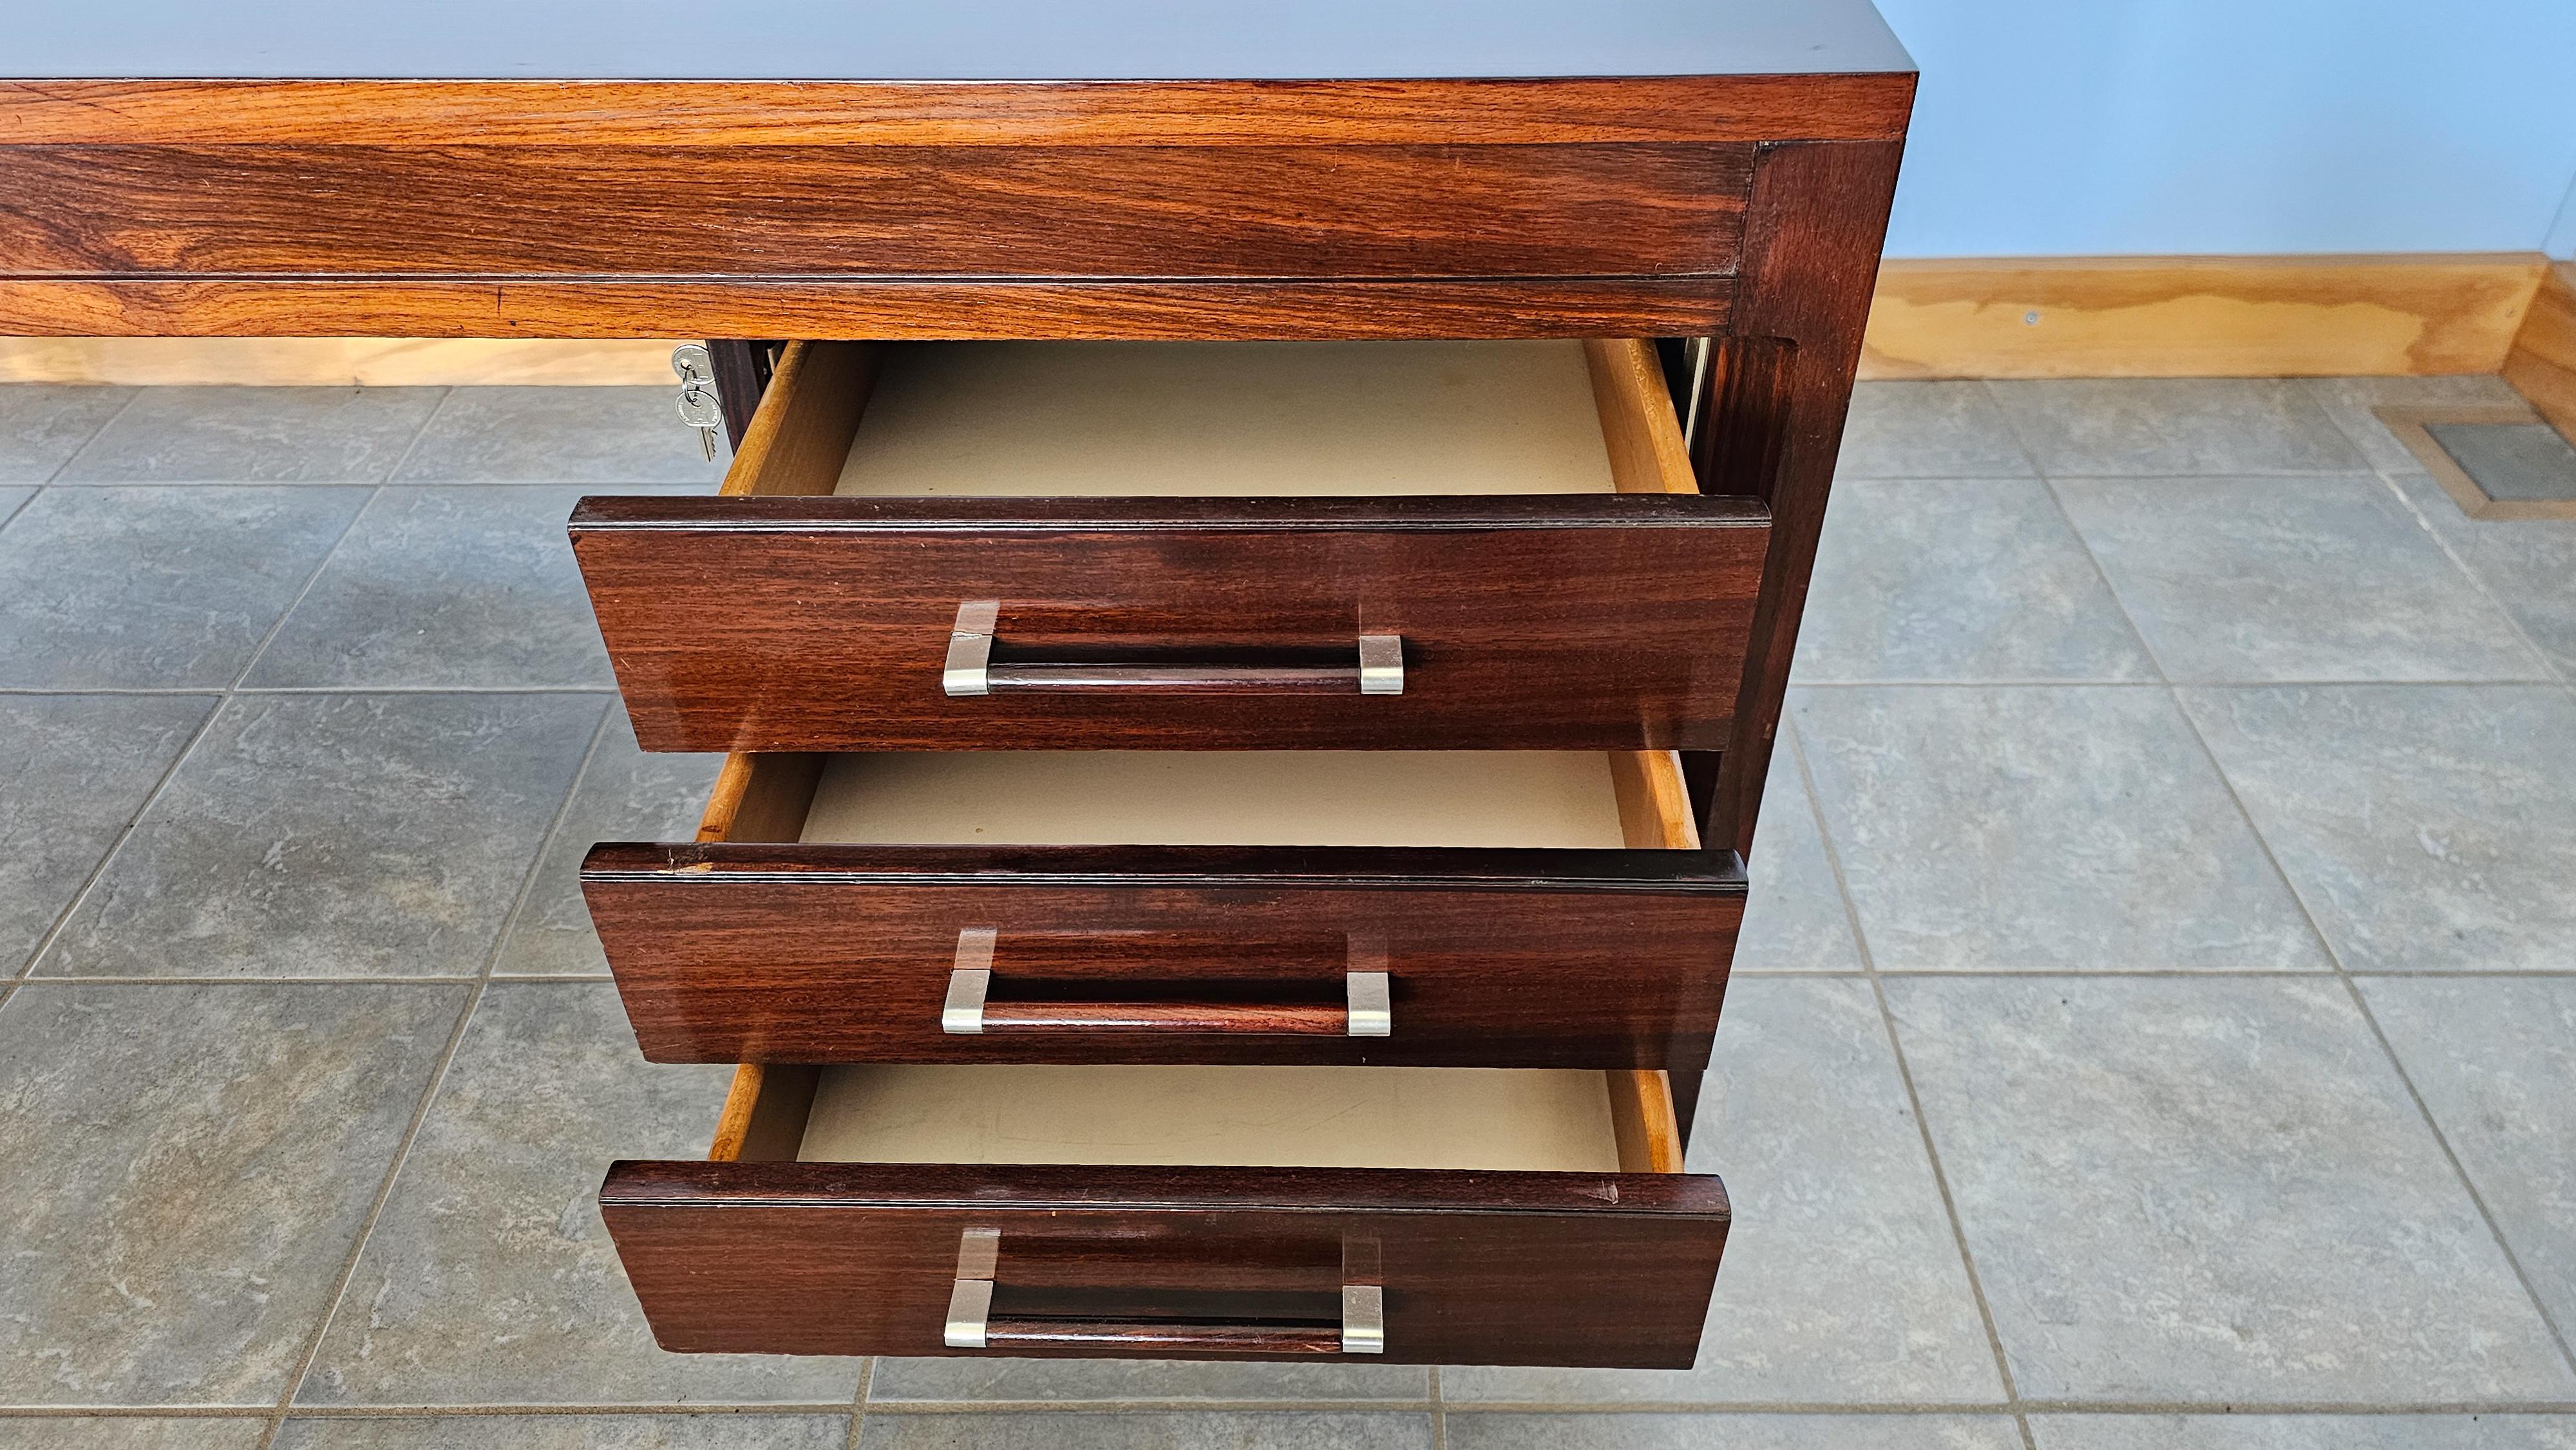 Anonima Castelli Palisander Wood Desk with Elegant Metal Insert Handle, 1970s For Sale 4